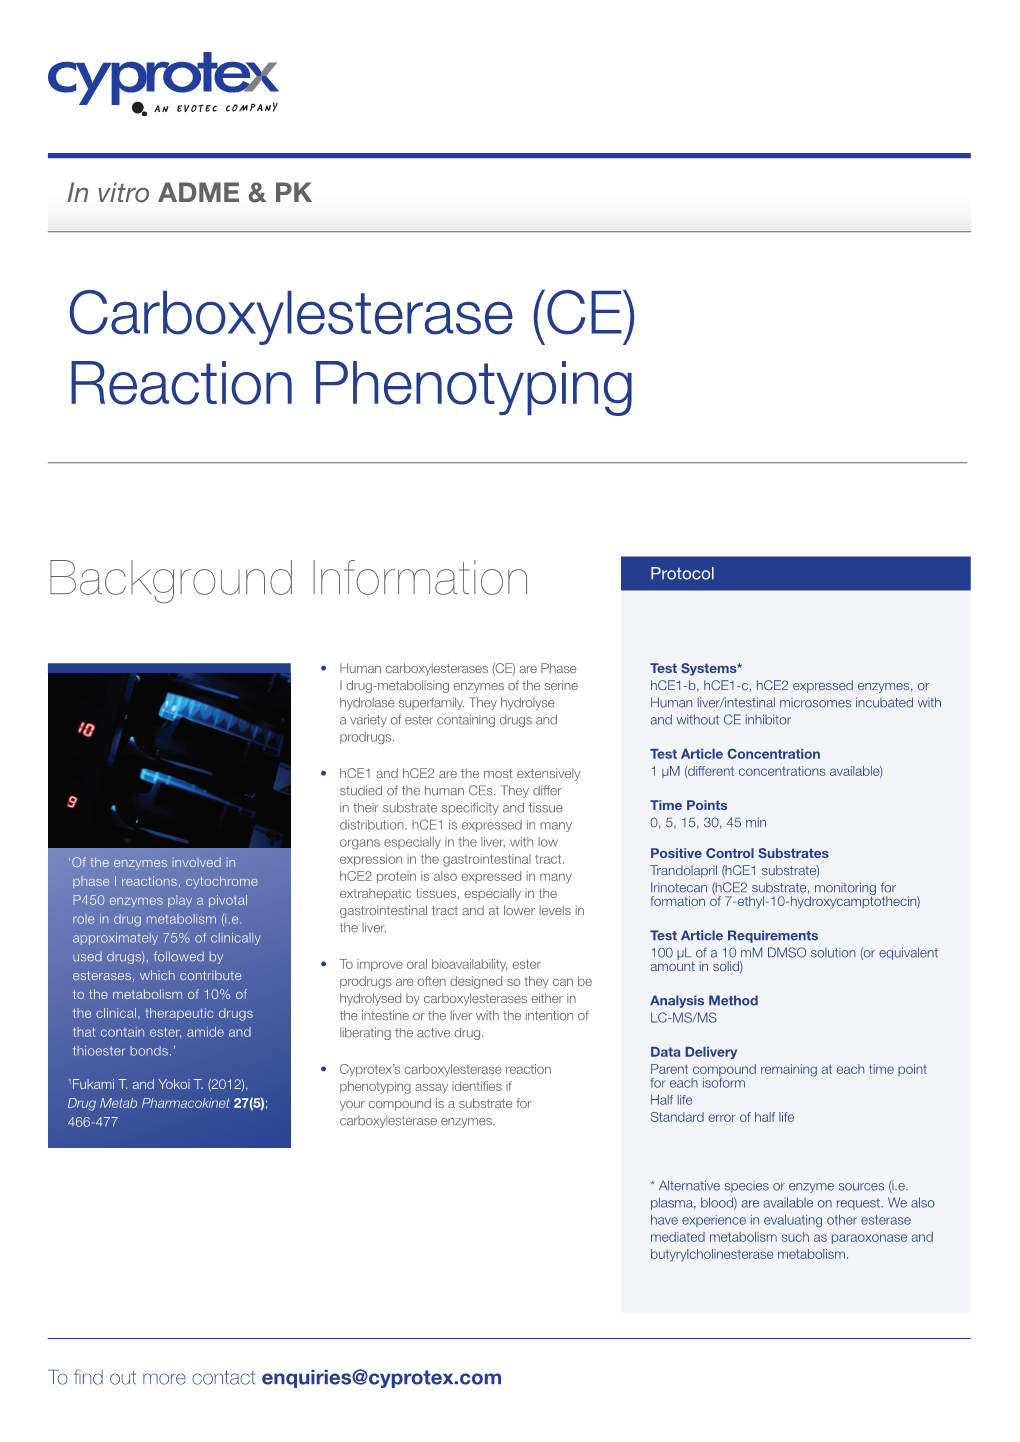 Carboxylesterase Reaction Phenotyping